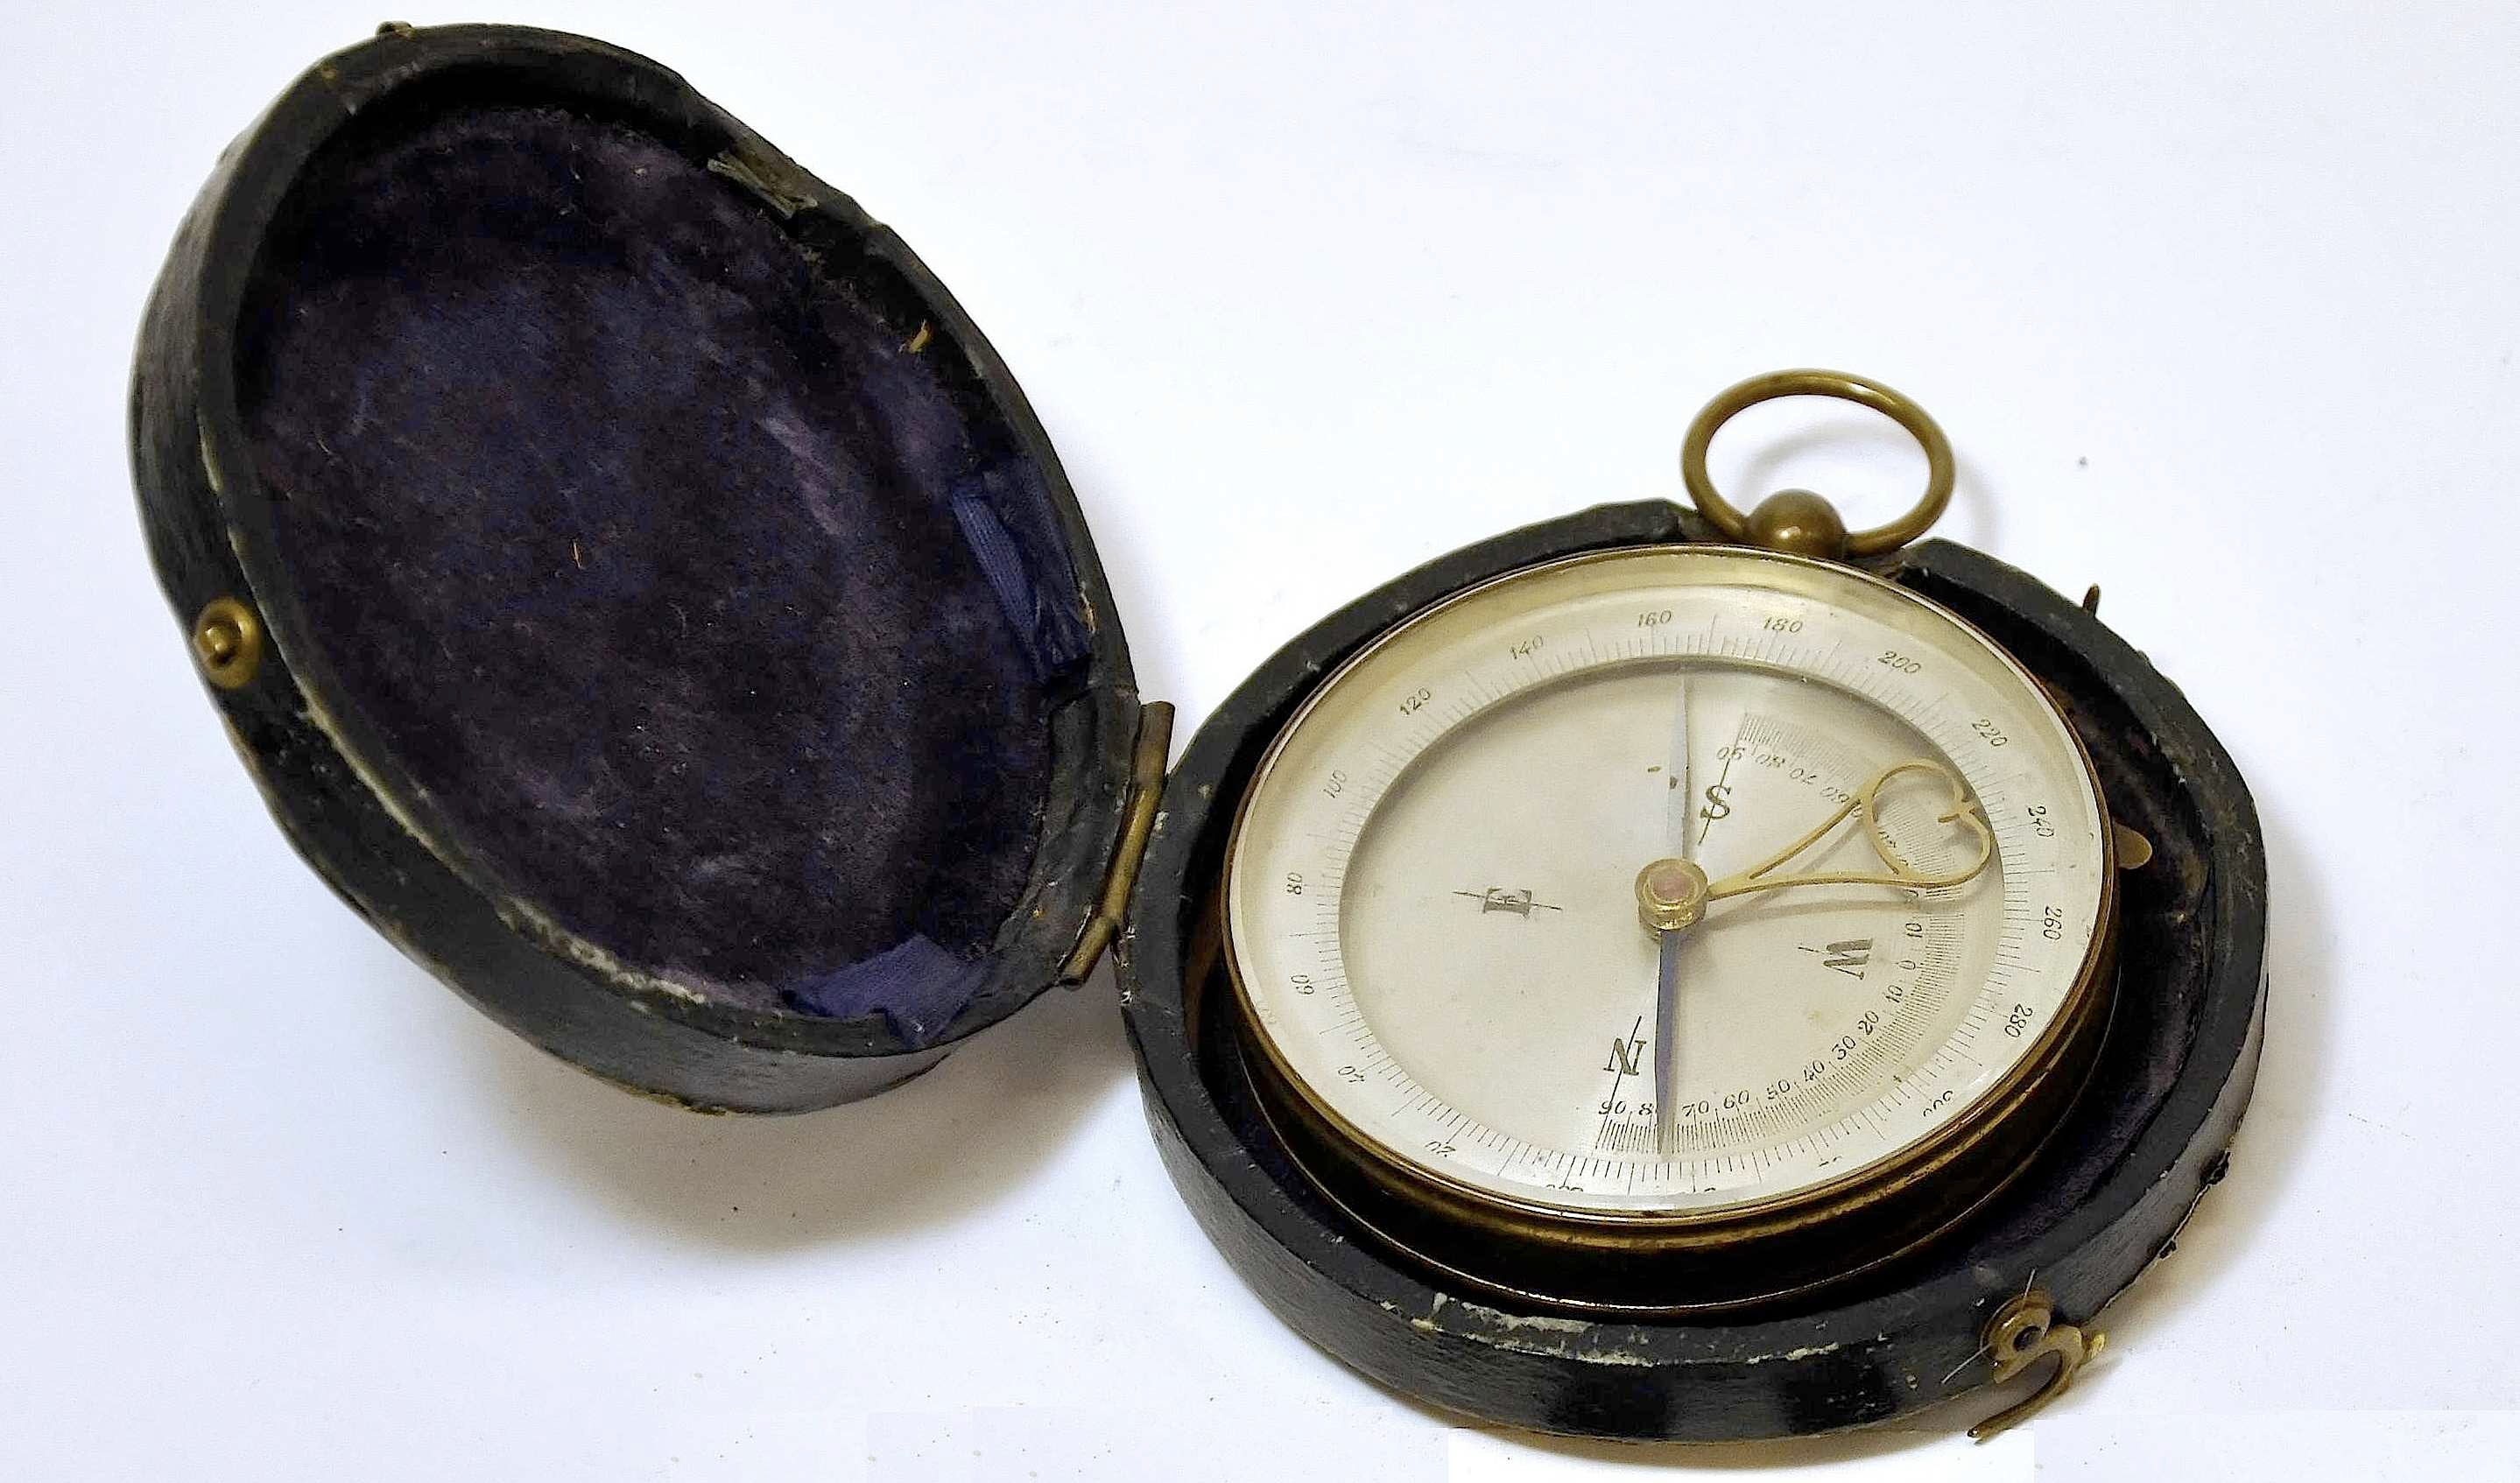 Thomas Condon's Pocket Compass (view two)